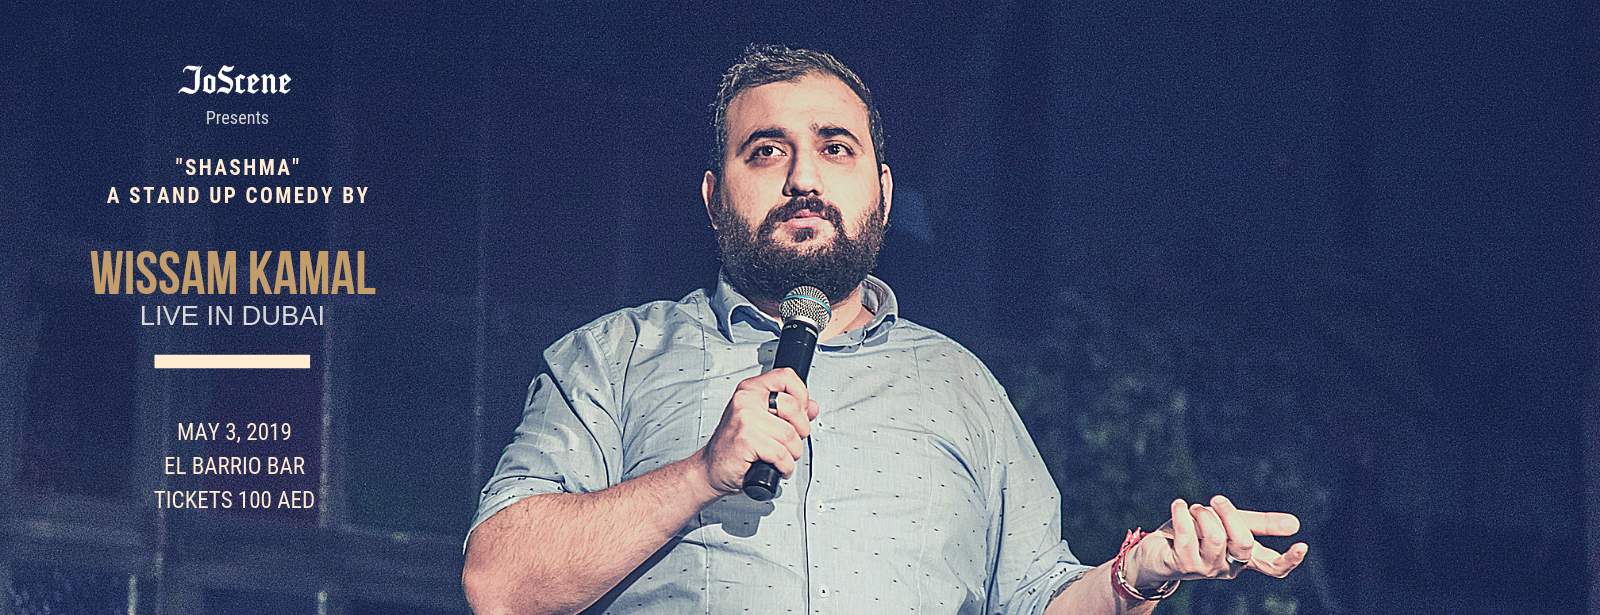 Wissam Kamal Comedy Show - Coming Soon in UAE